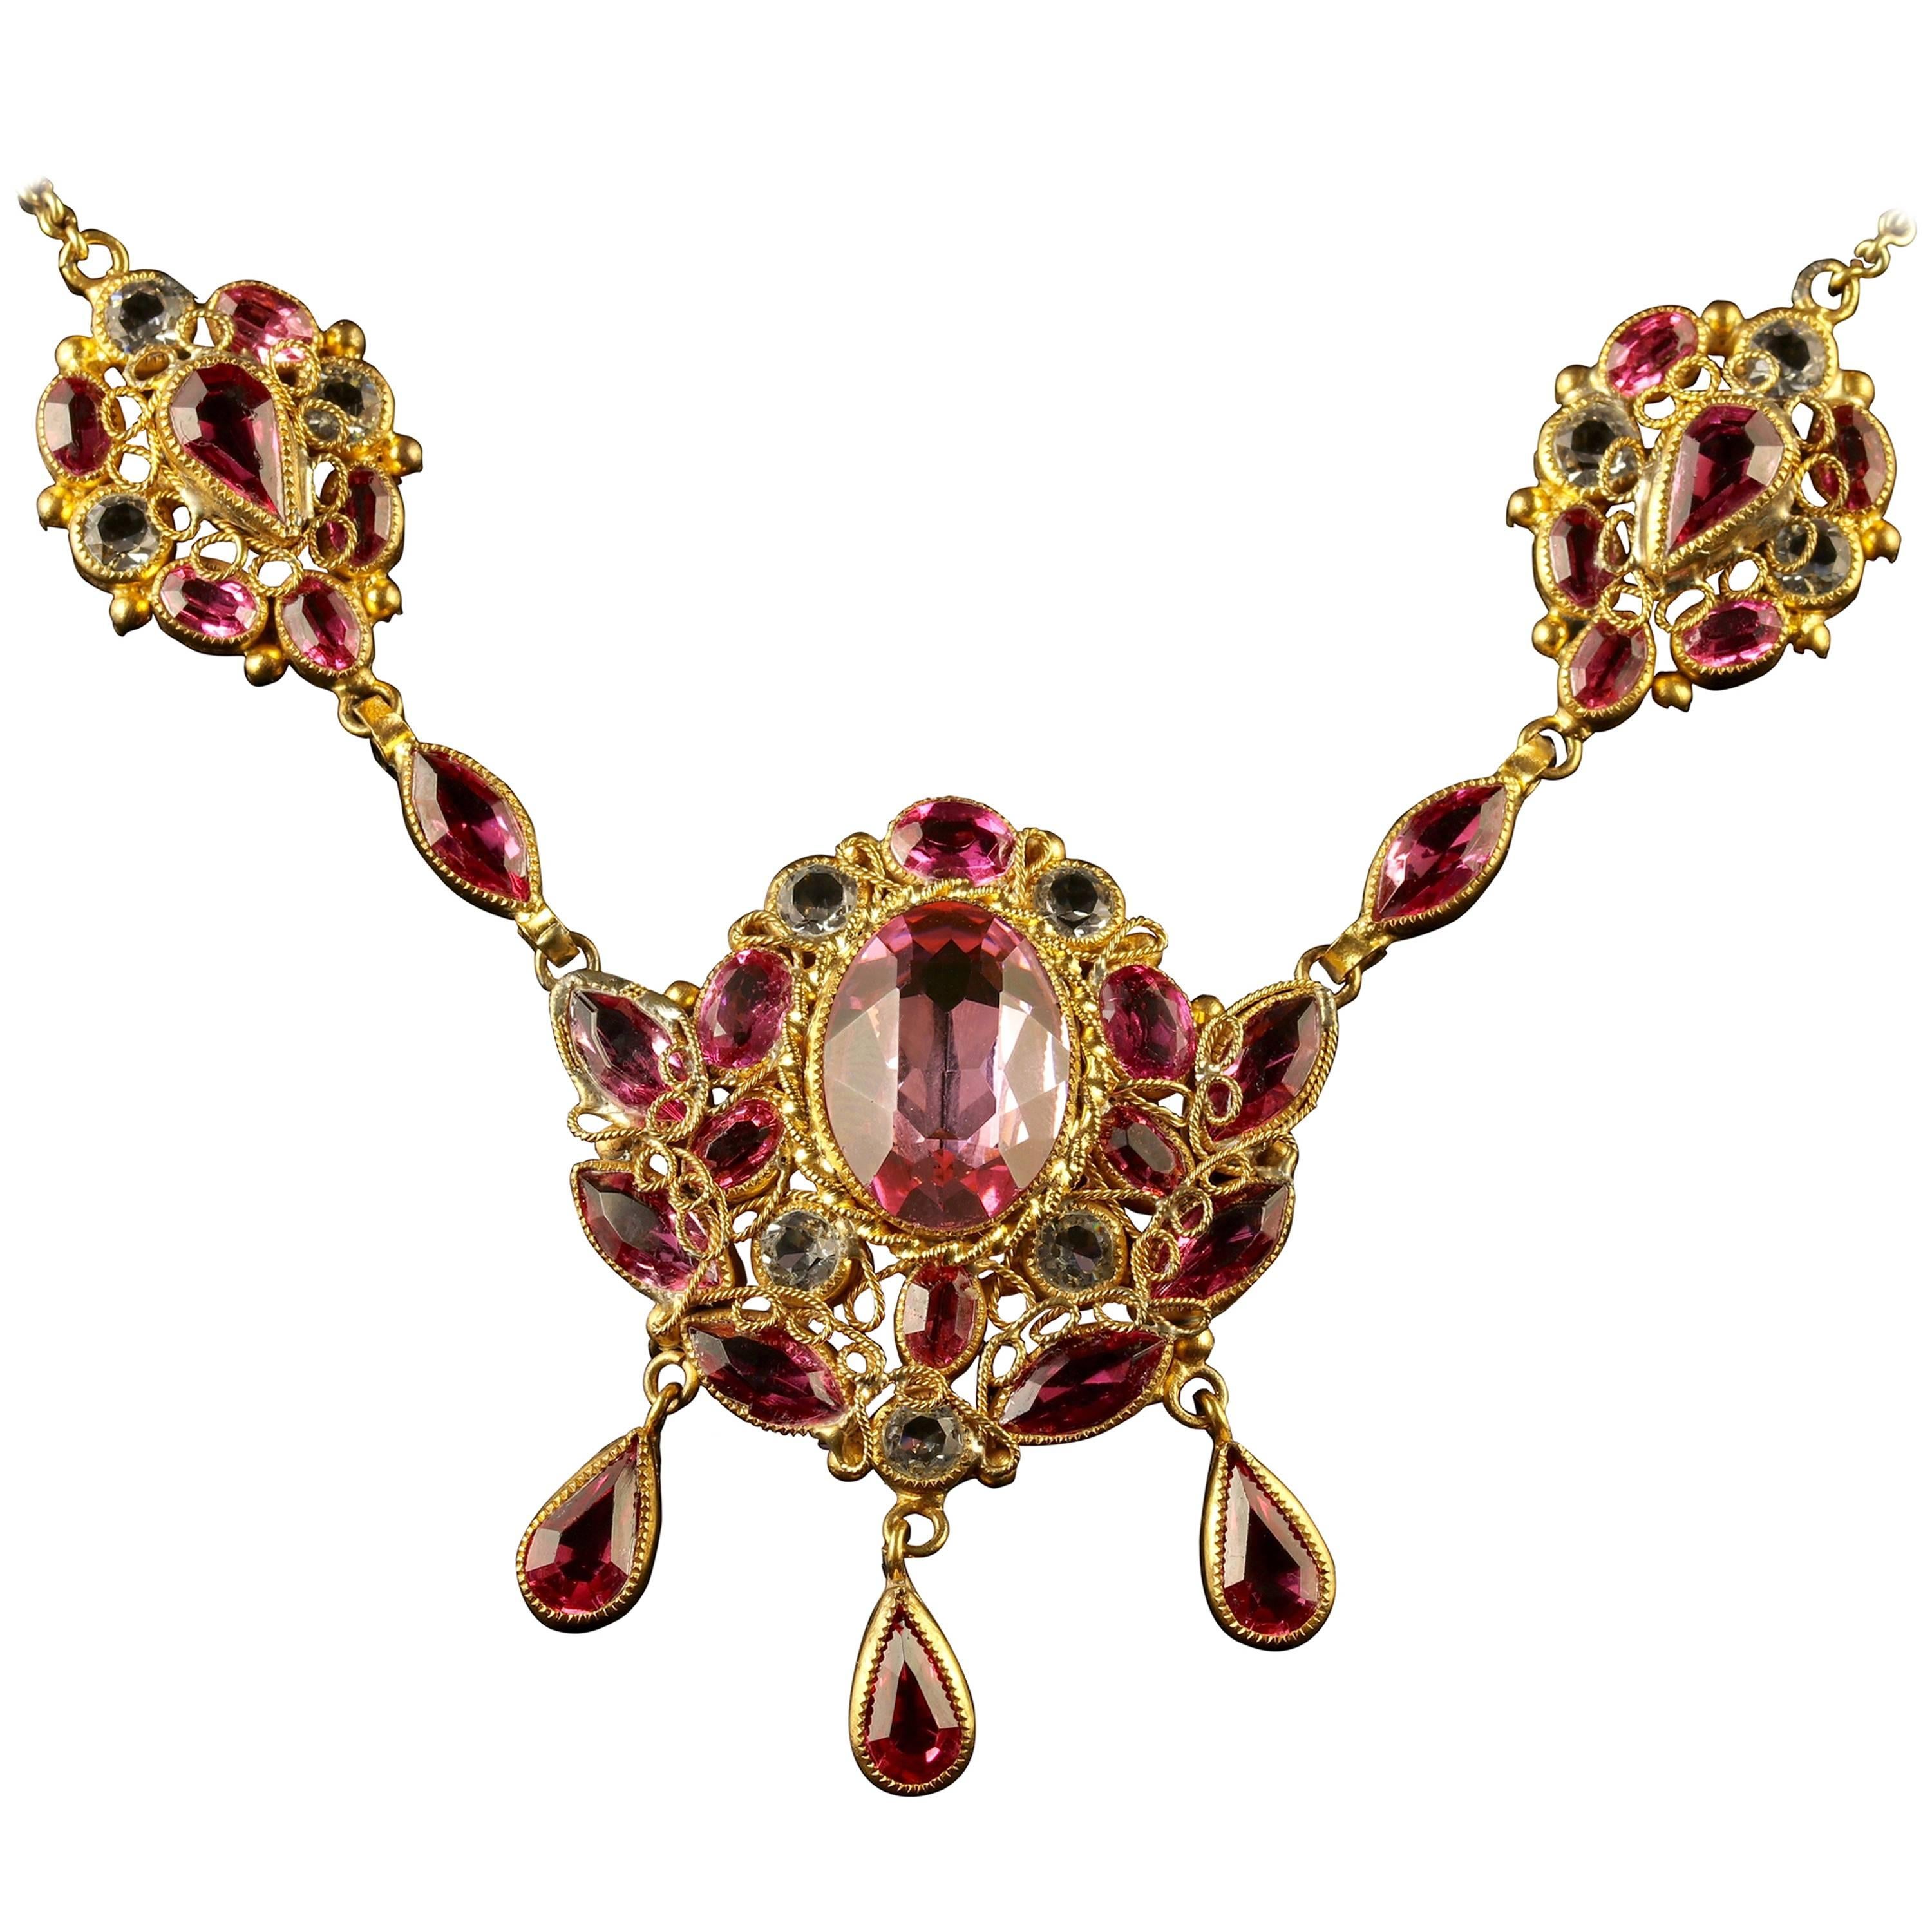 Antique Victorian Pink Paste Necklace, circa 1870